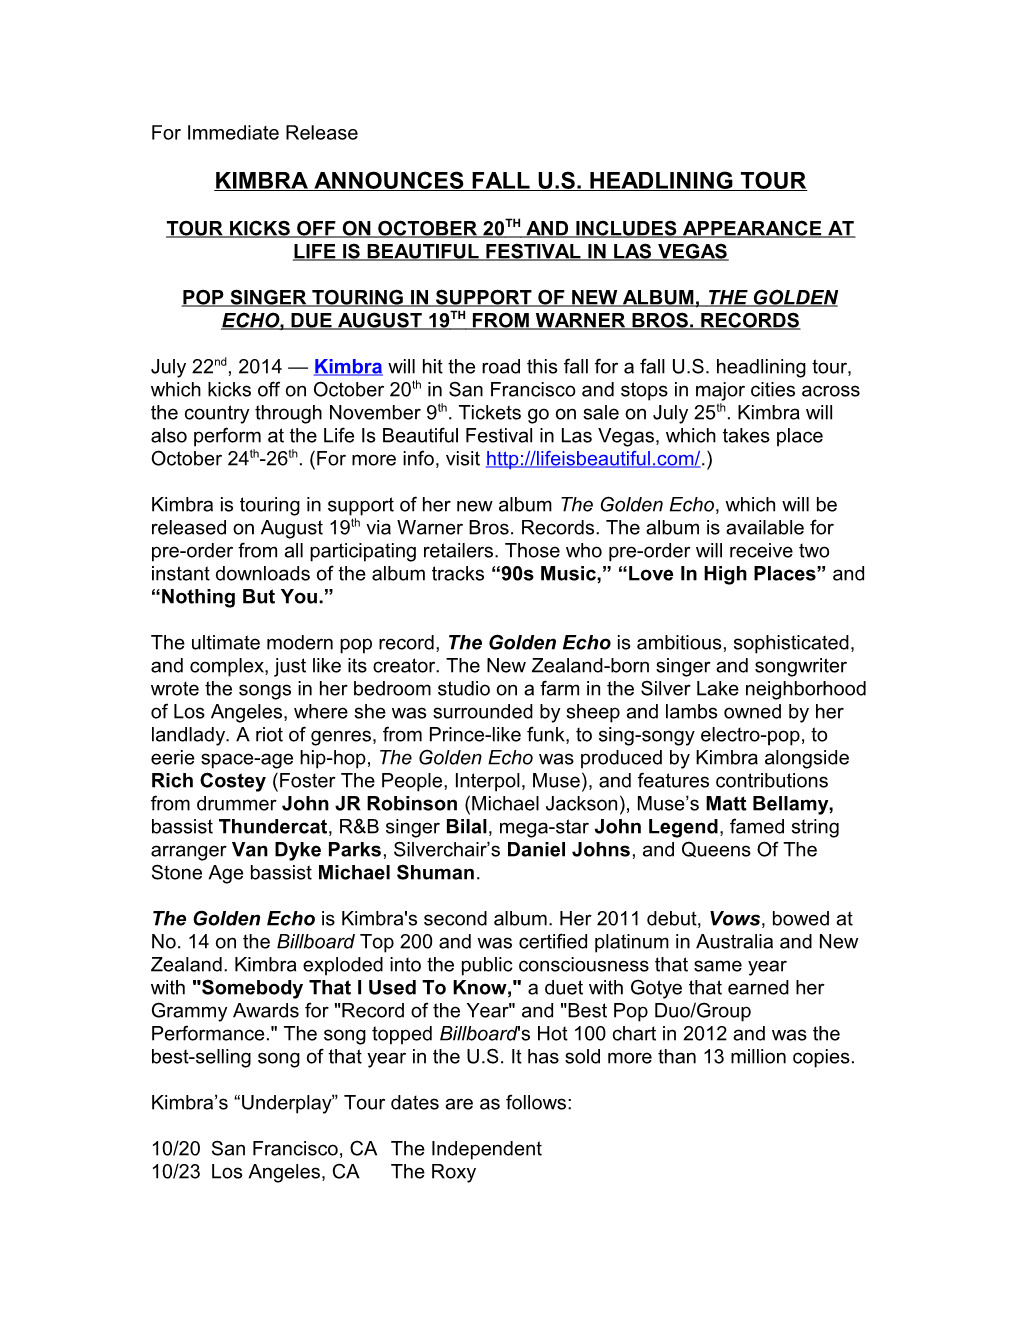 Kimbra Announces Fall U.S. Headlining Tour